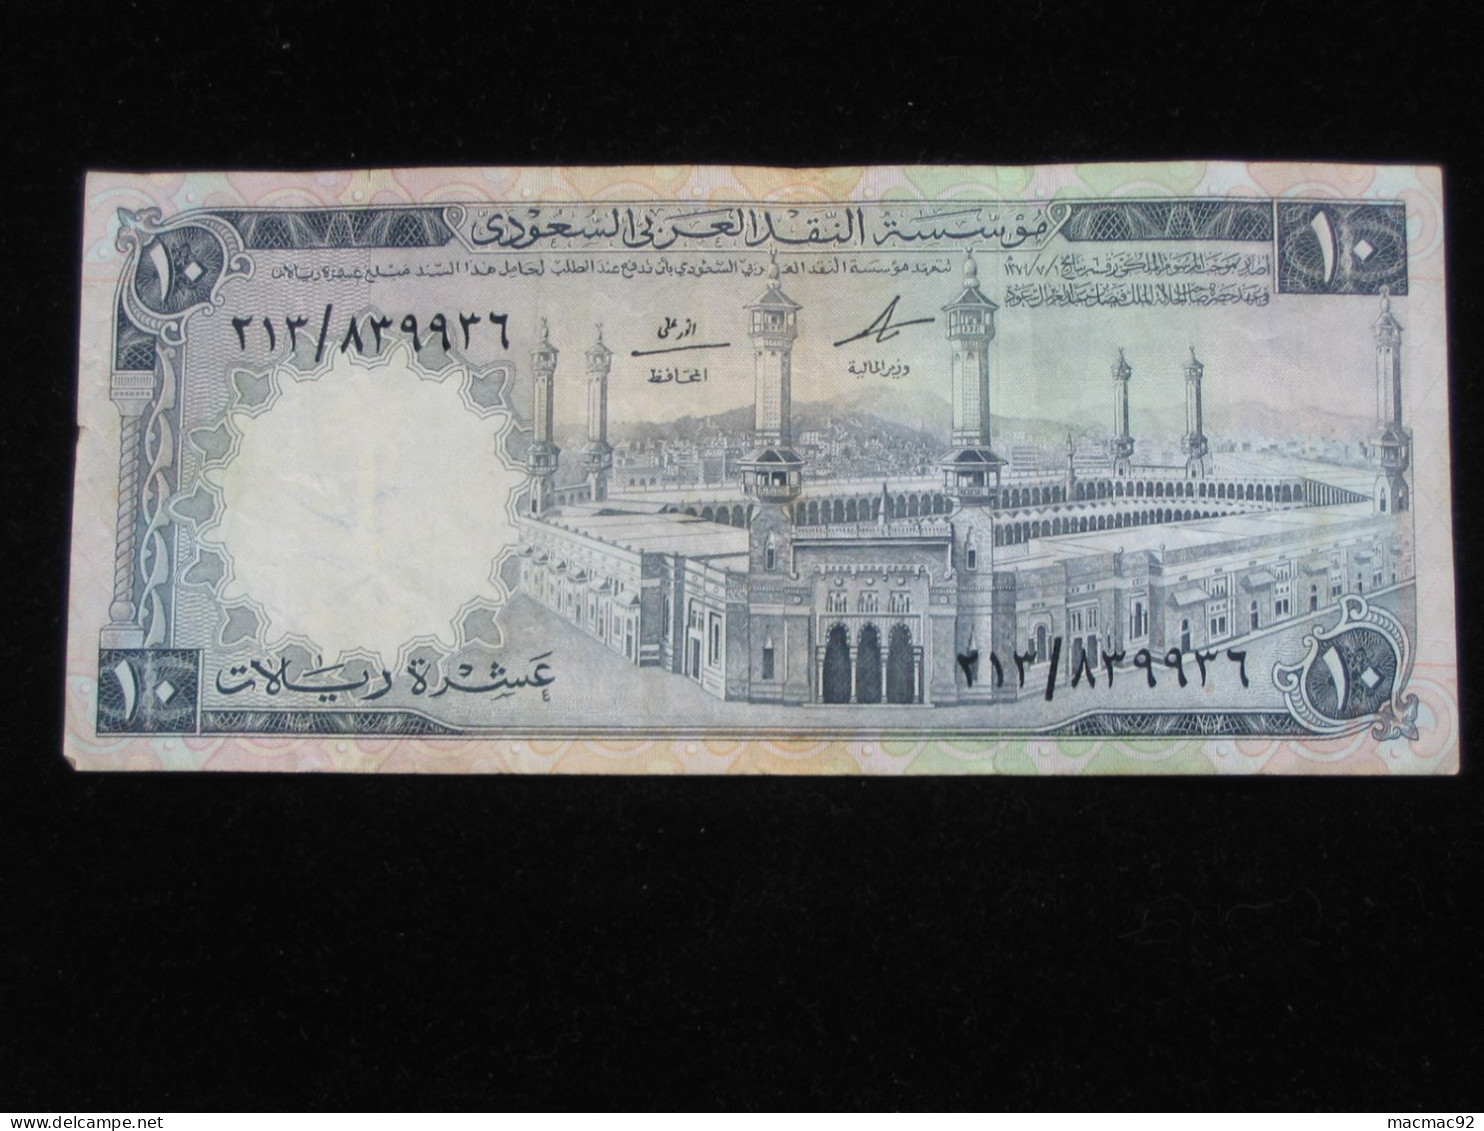 - ARABIE SAOUDITE 1968  10 Ten Riyals - Saudi Arabian Monetary Agency  **** EN ACHAT IMMEDIAT **** - Arabia Saudita